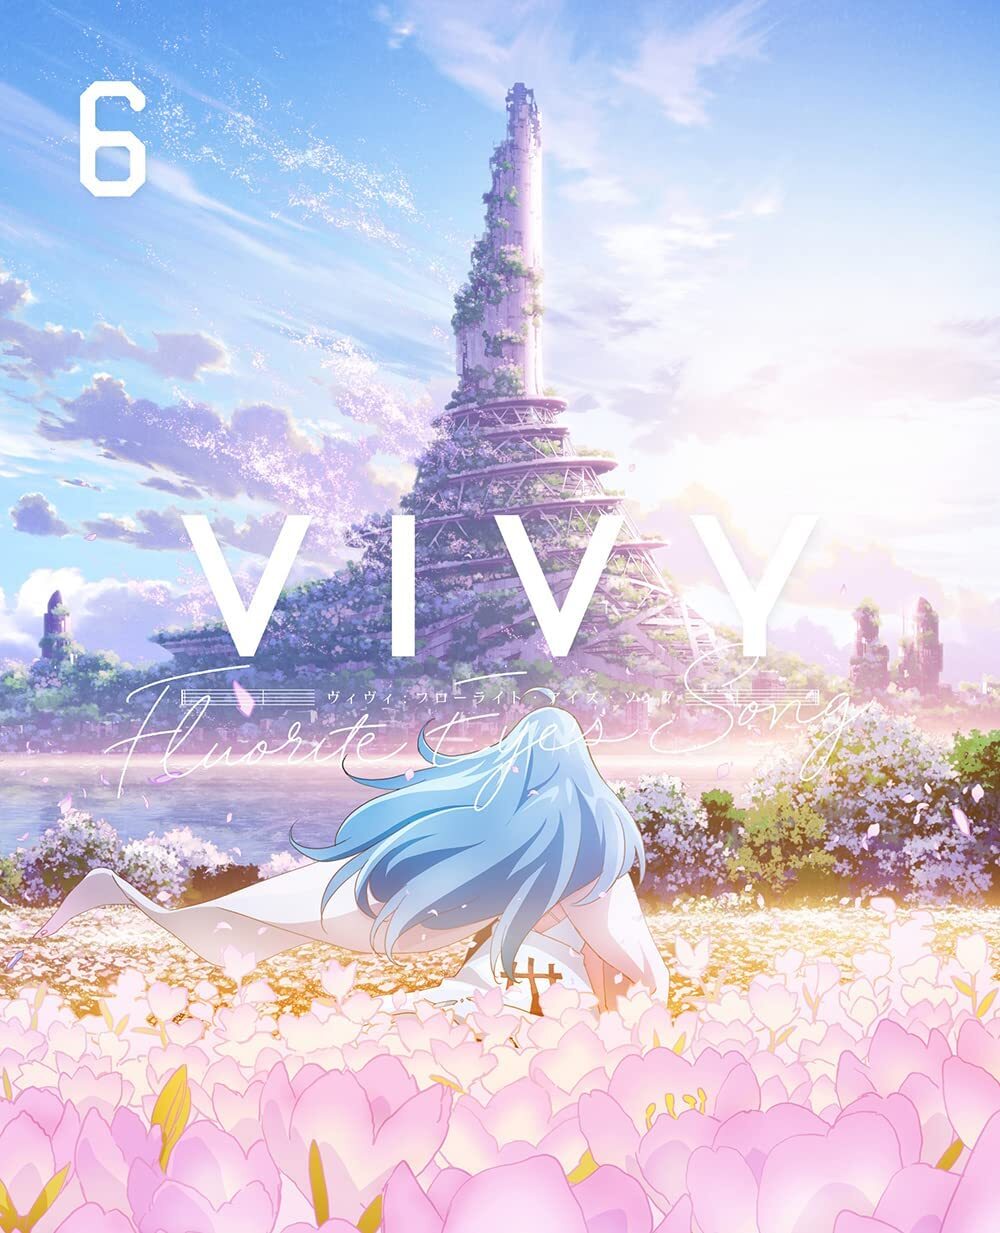 Vivy: Fluorite Eye's Song: Vol. 6 Blu-ray (Blu-ray + CD) (Japan)